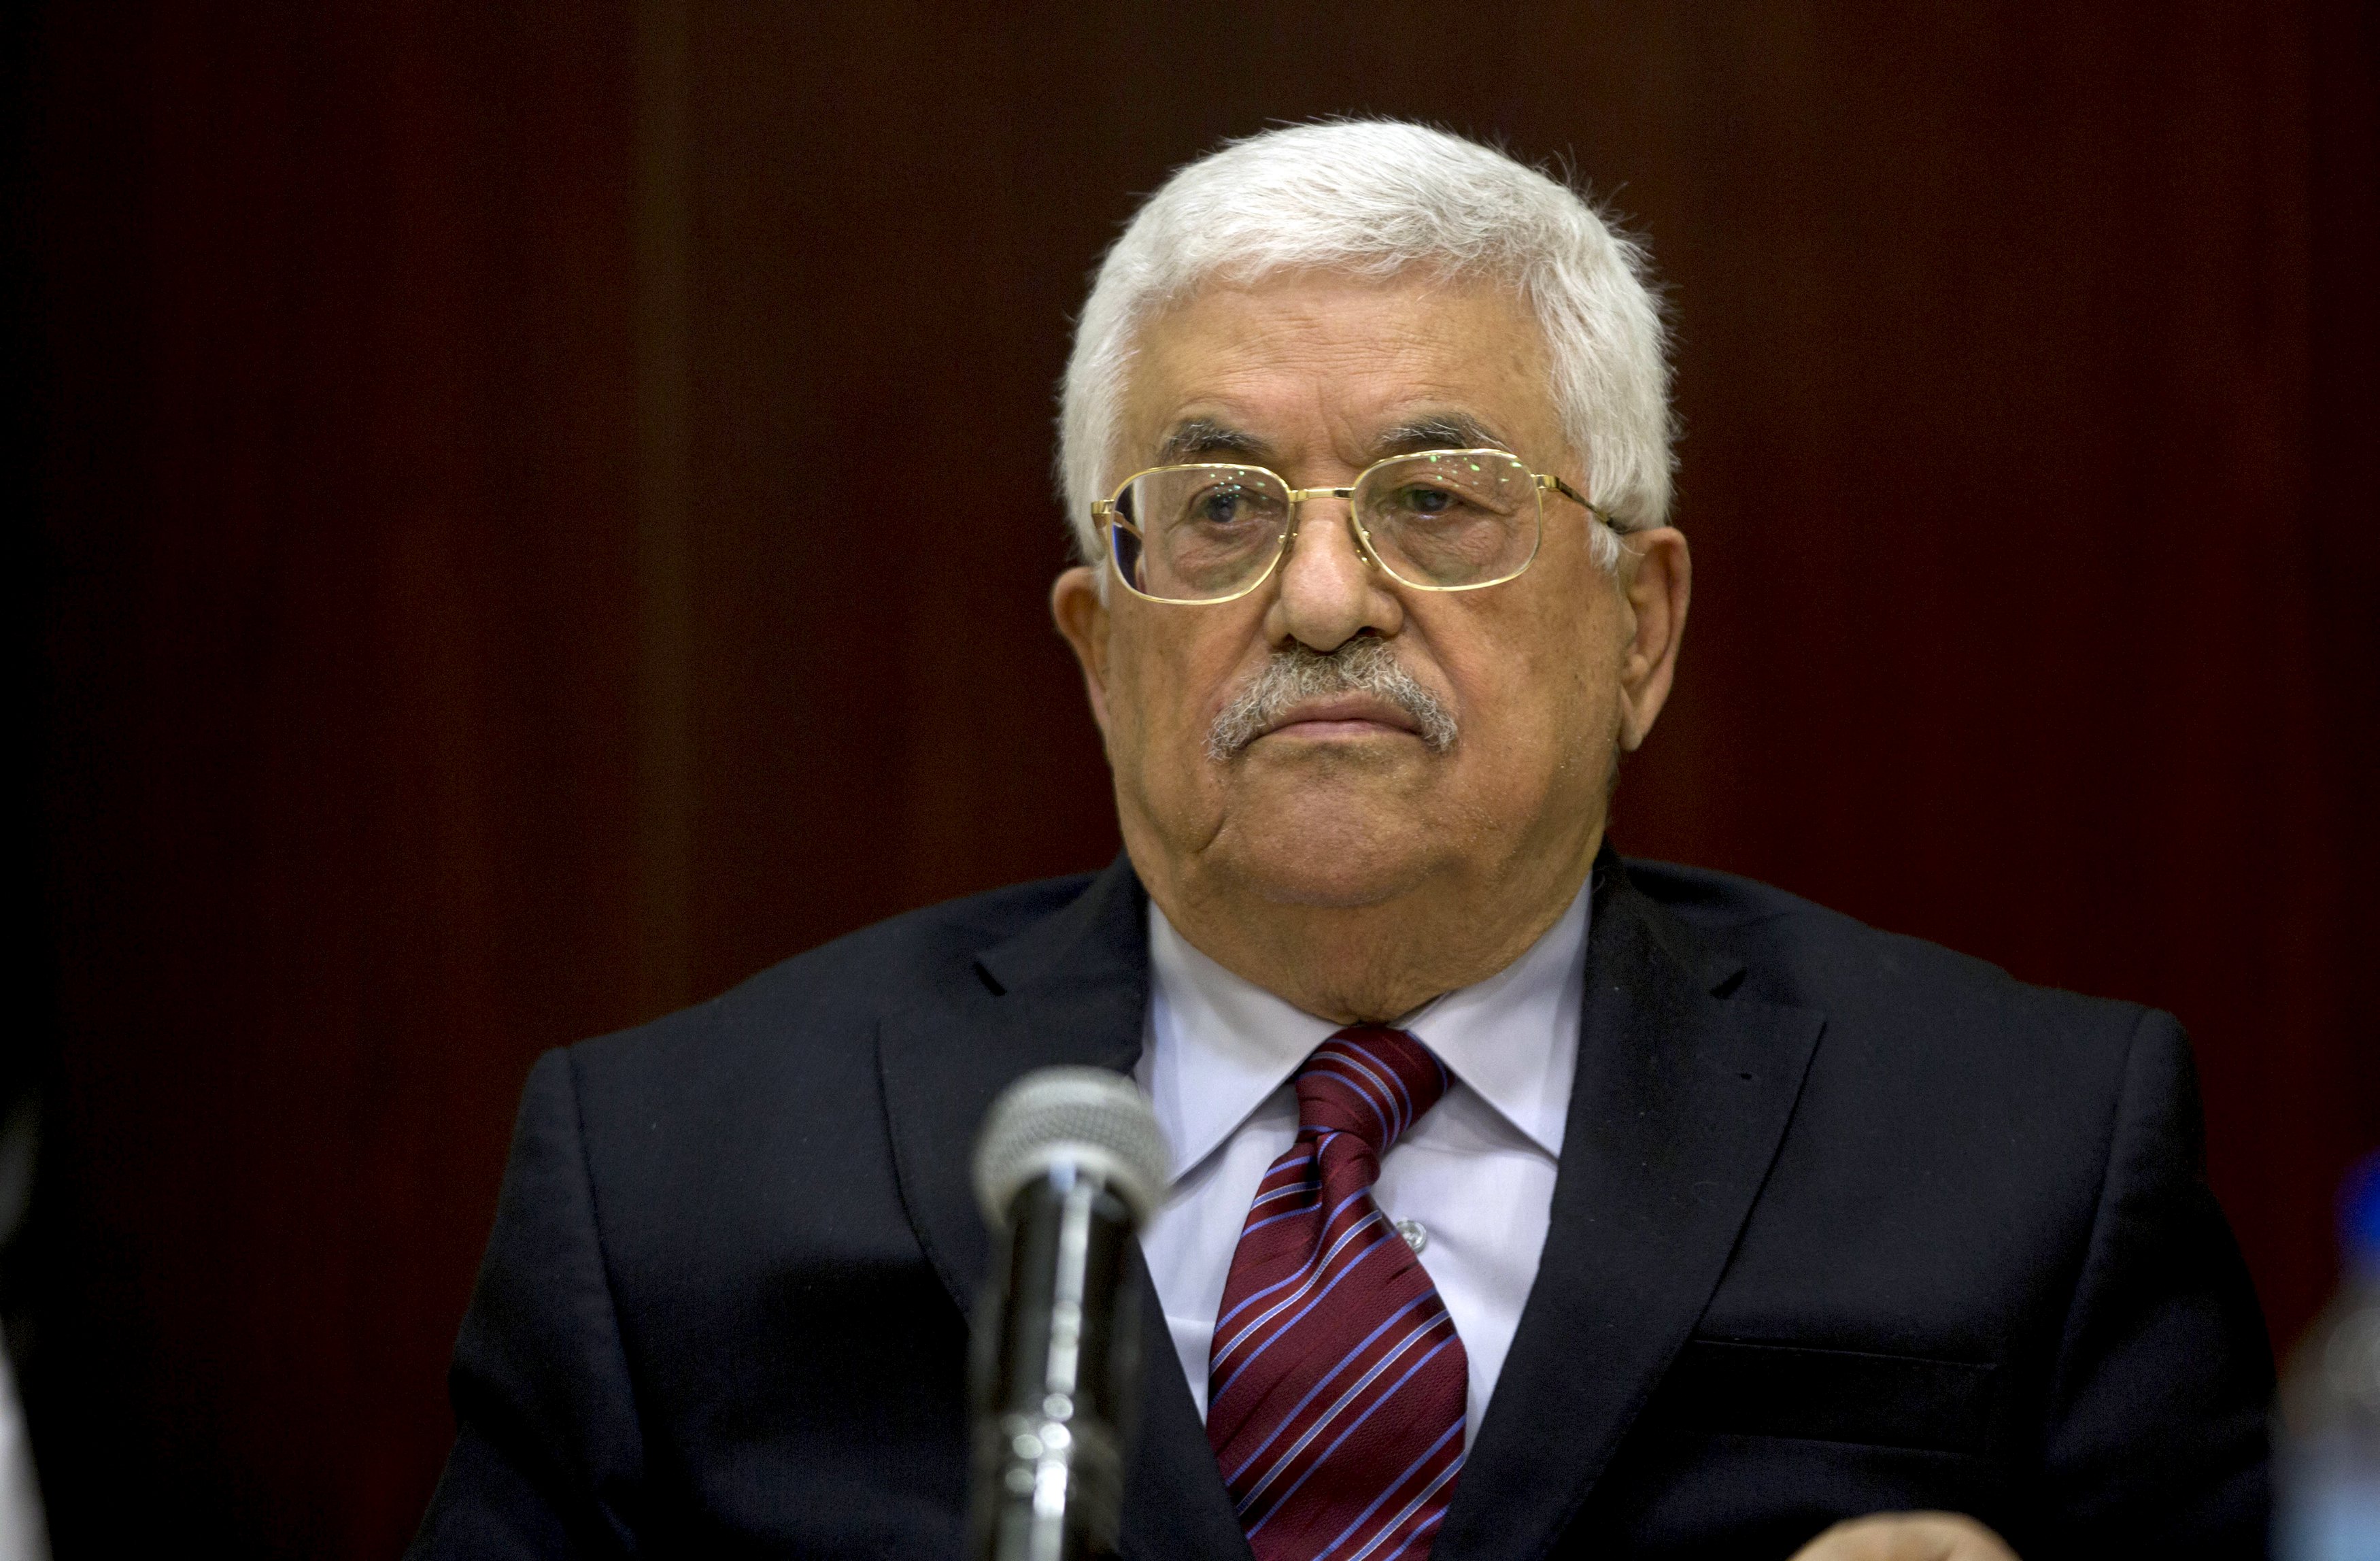 Palestinian President Mahmoud Abbas chairs a Palestinian Liberation Organization (PLO) executive committee meeting in Ramallah, Aug. 22, 2015.